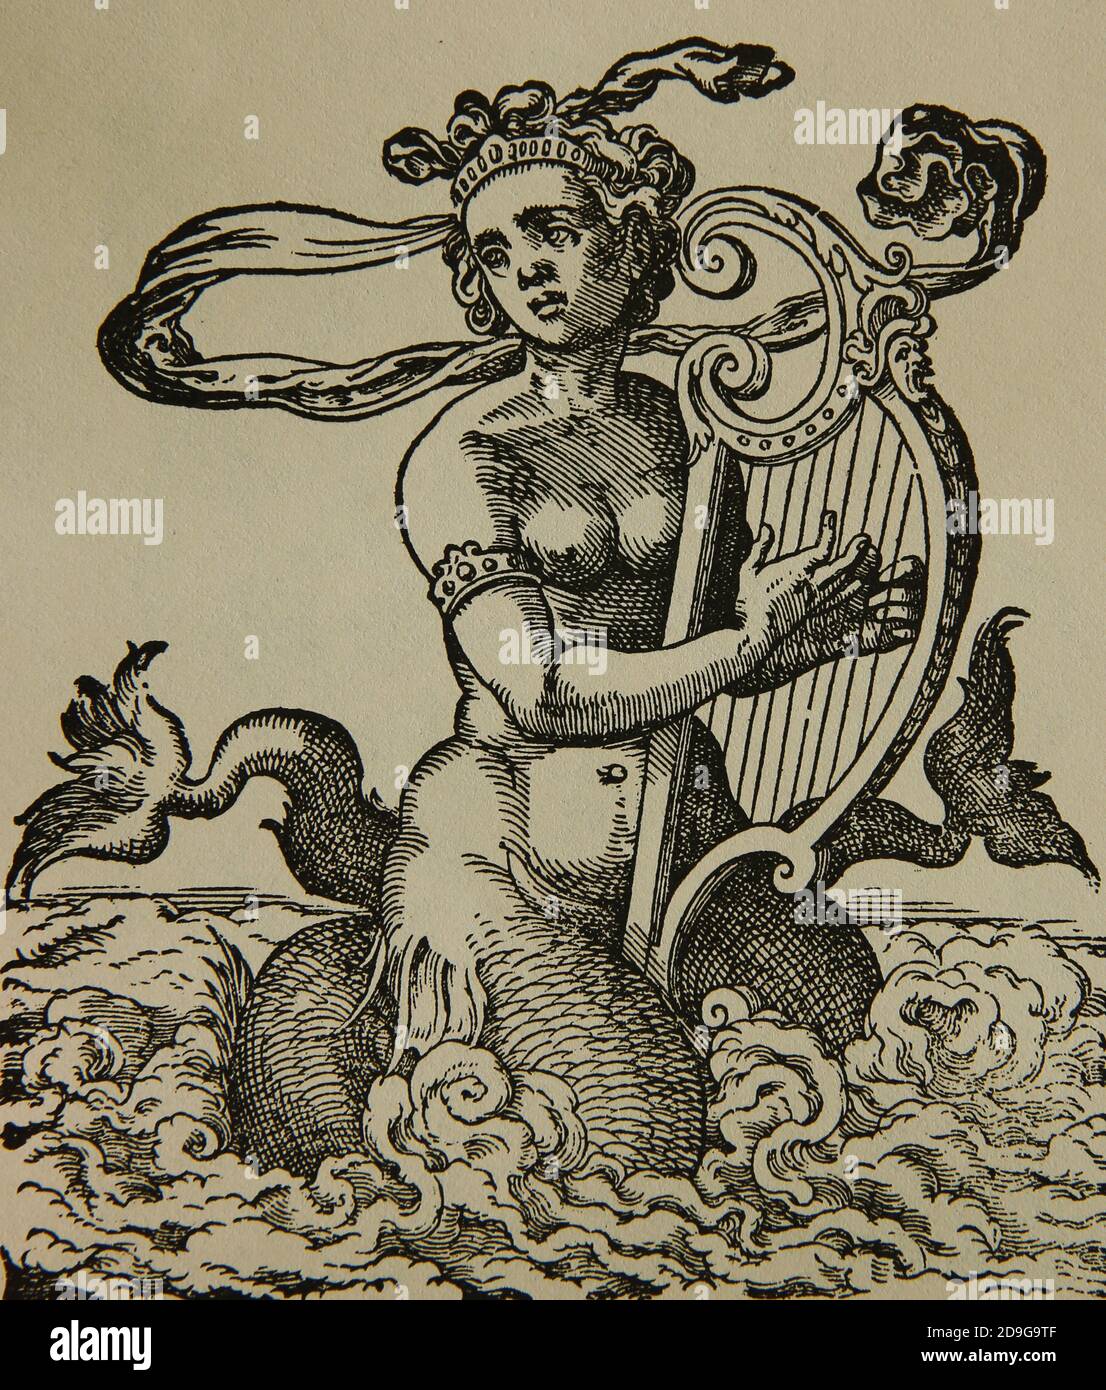 Siren mythology illustration hi-res stock photography and images